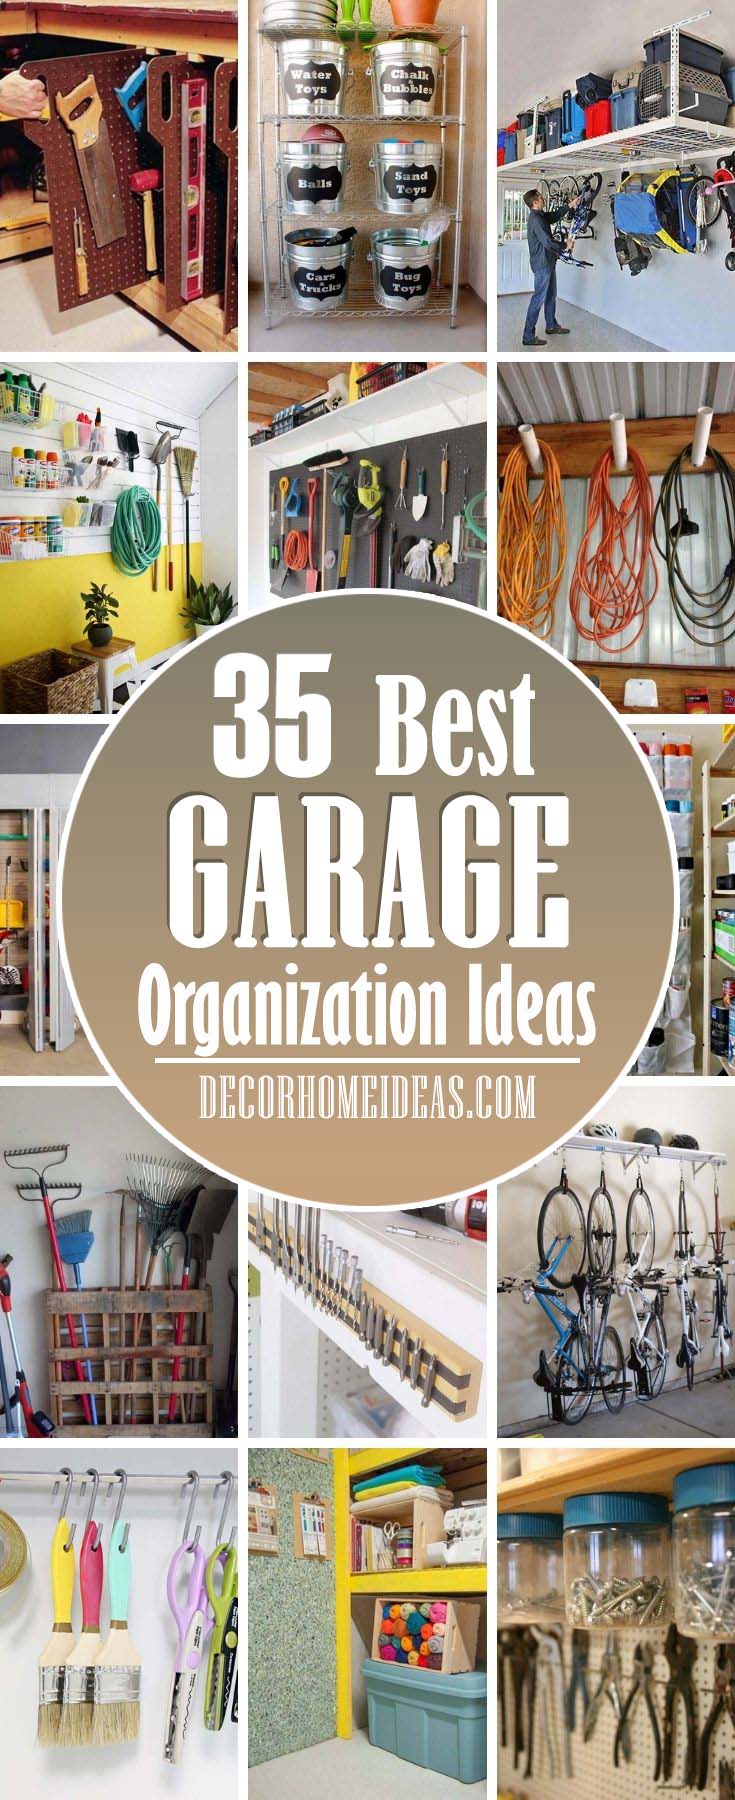 20 Smart Garage Organization Ideas For Instant Organization and ...